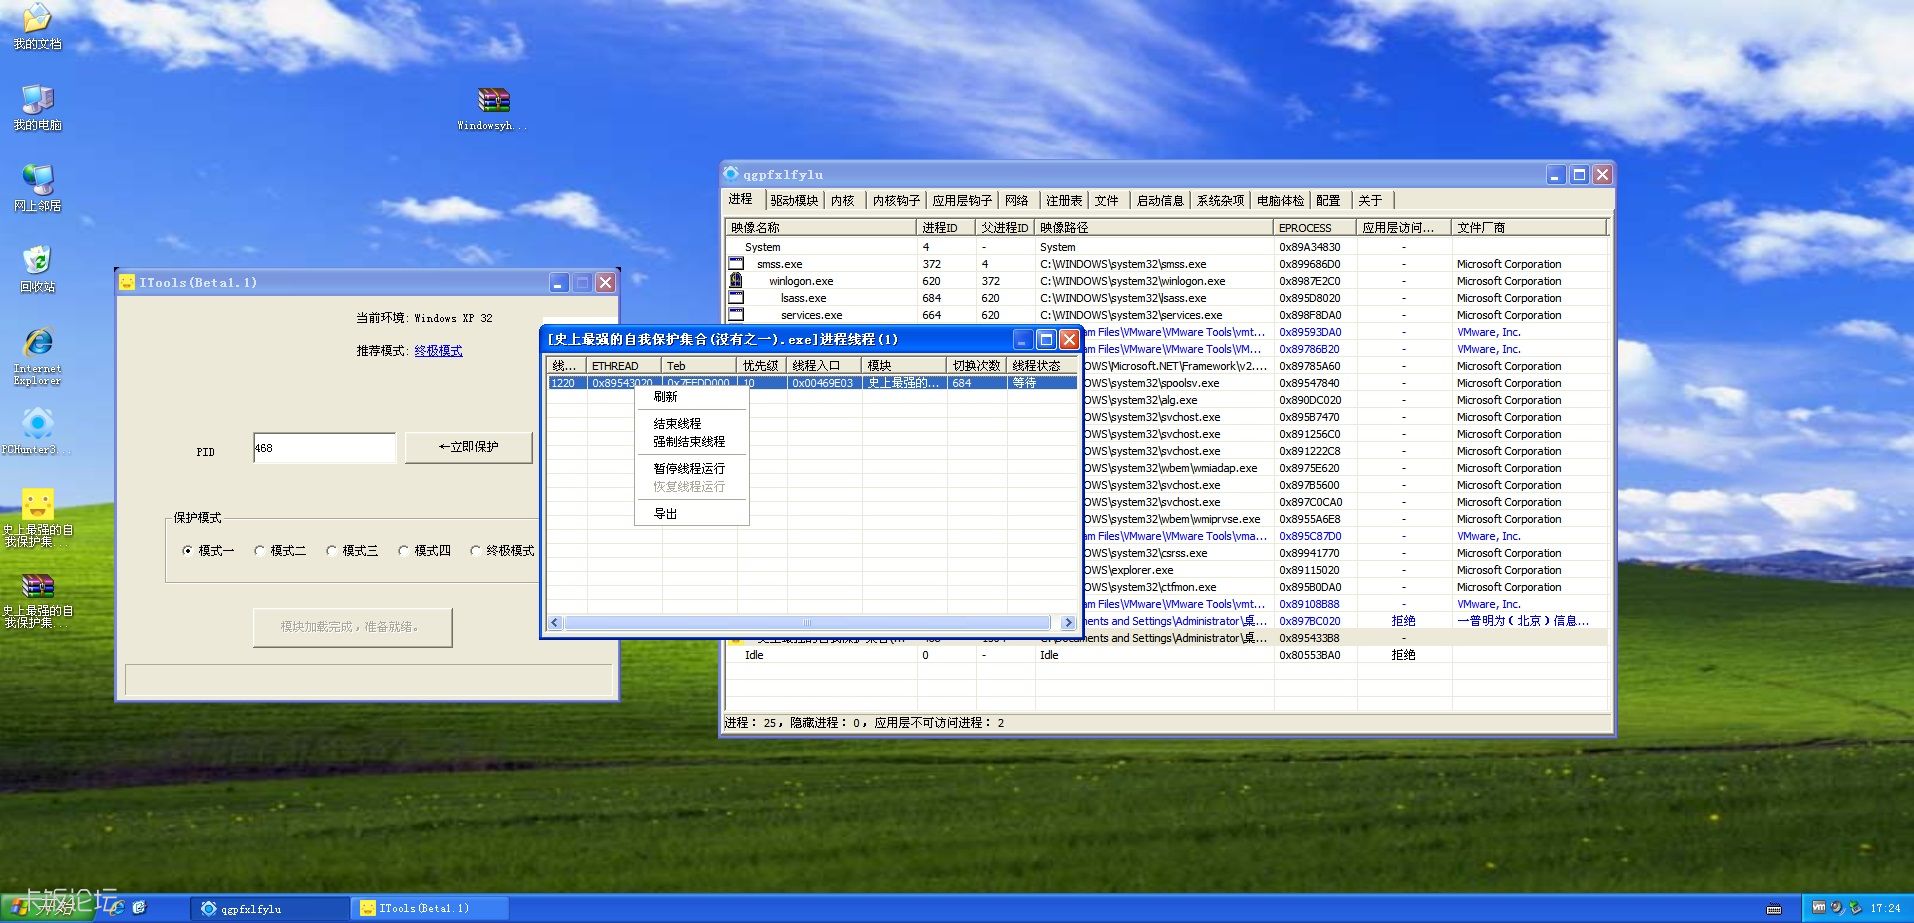 Windows XP Professional (2)-2020-09-29-17-24-13.jpg